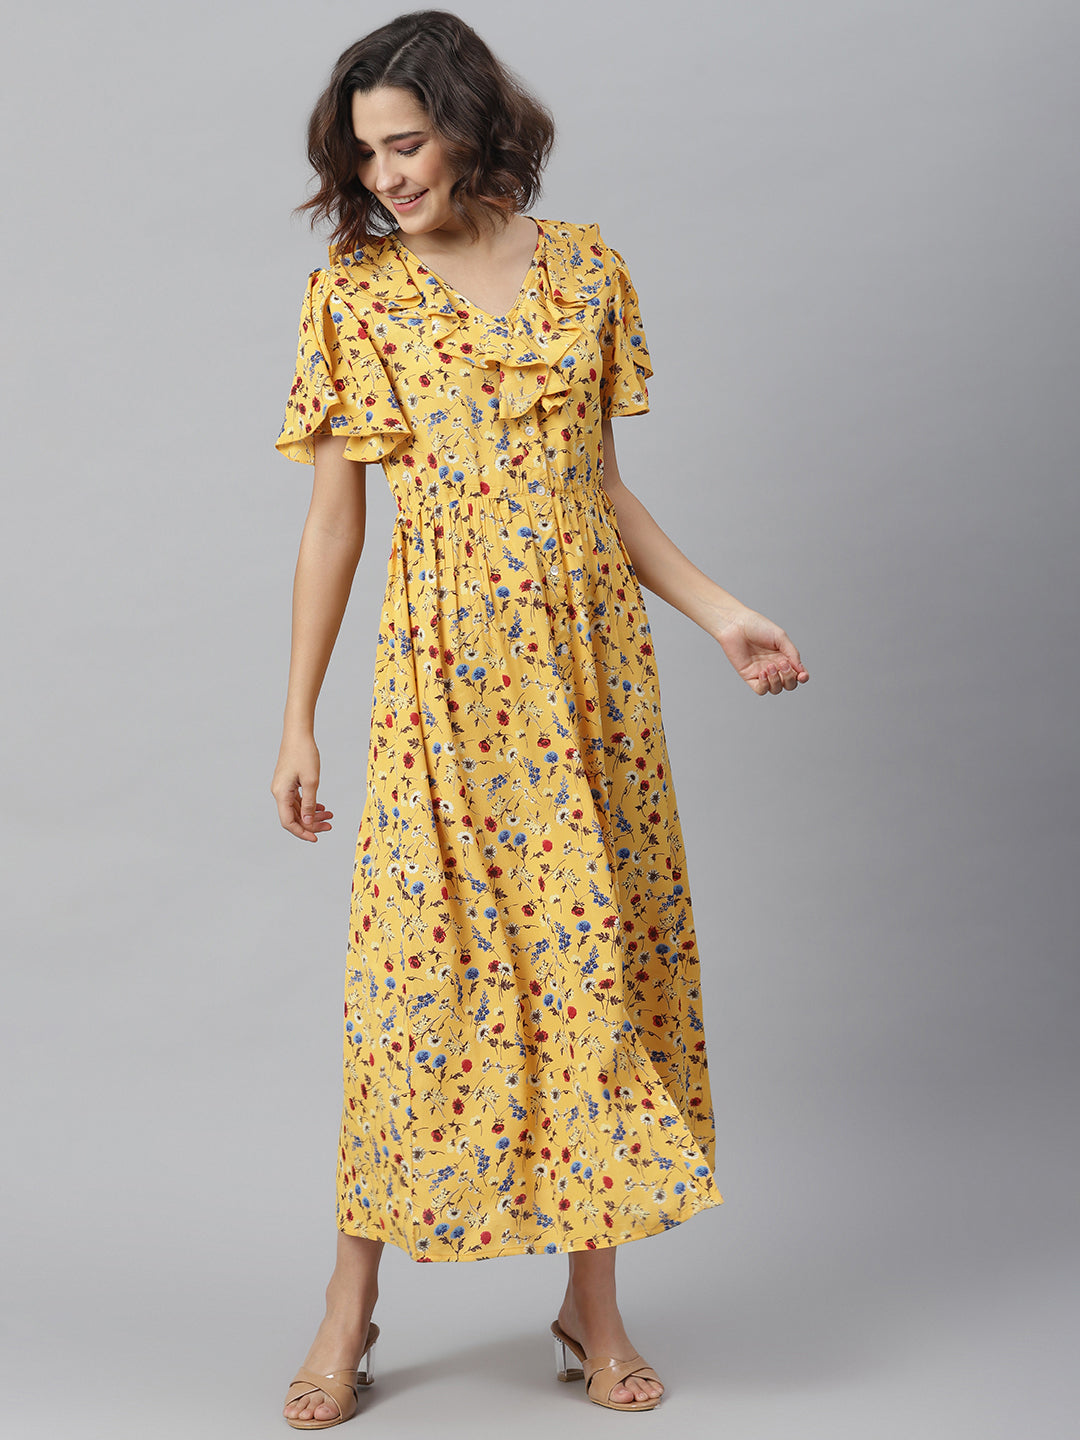 Women's Yellow Floral Maxi Dress